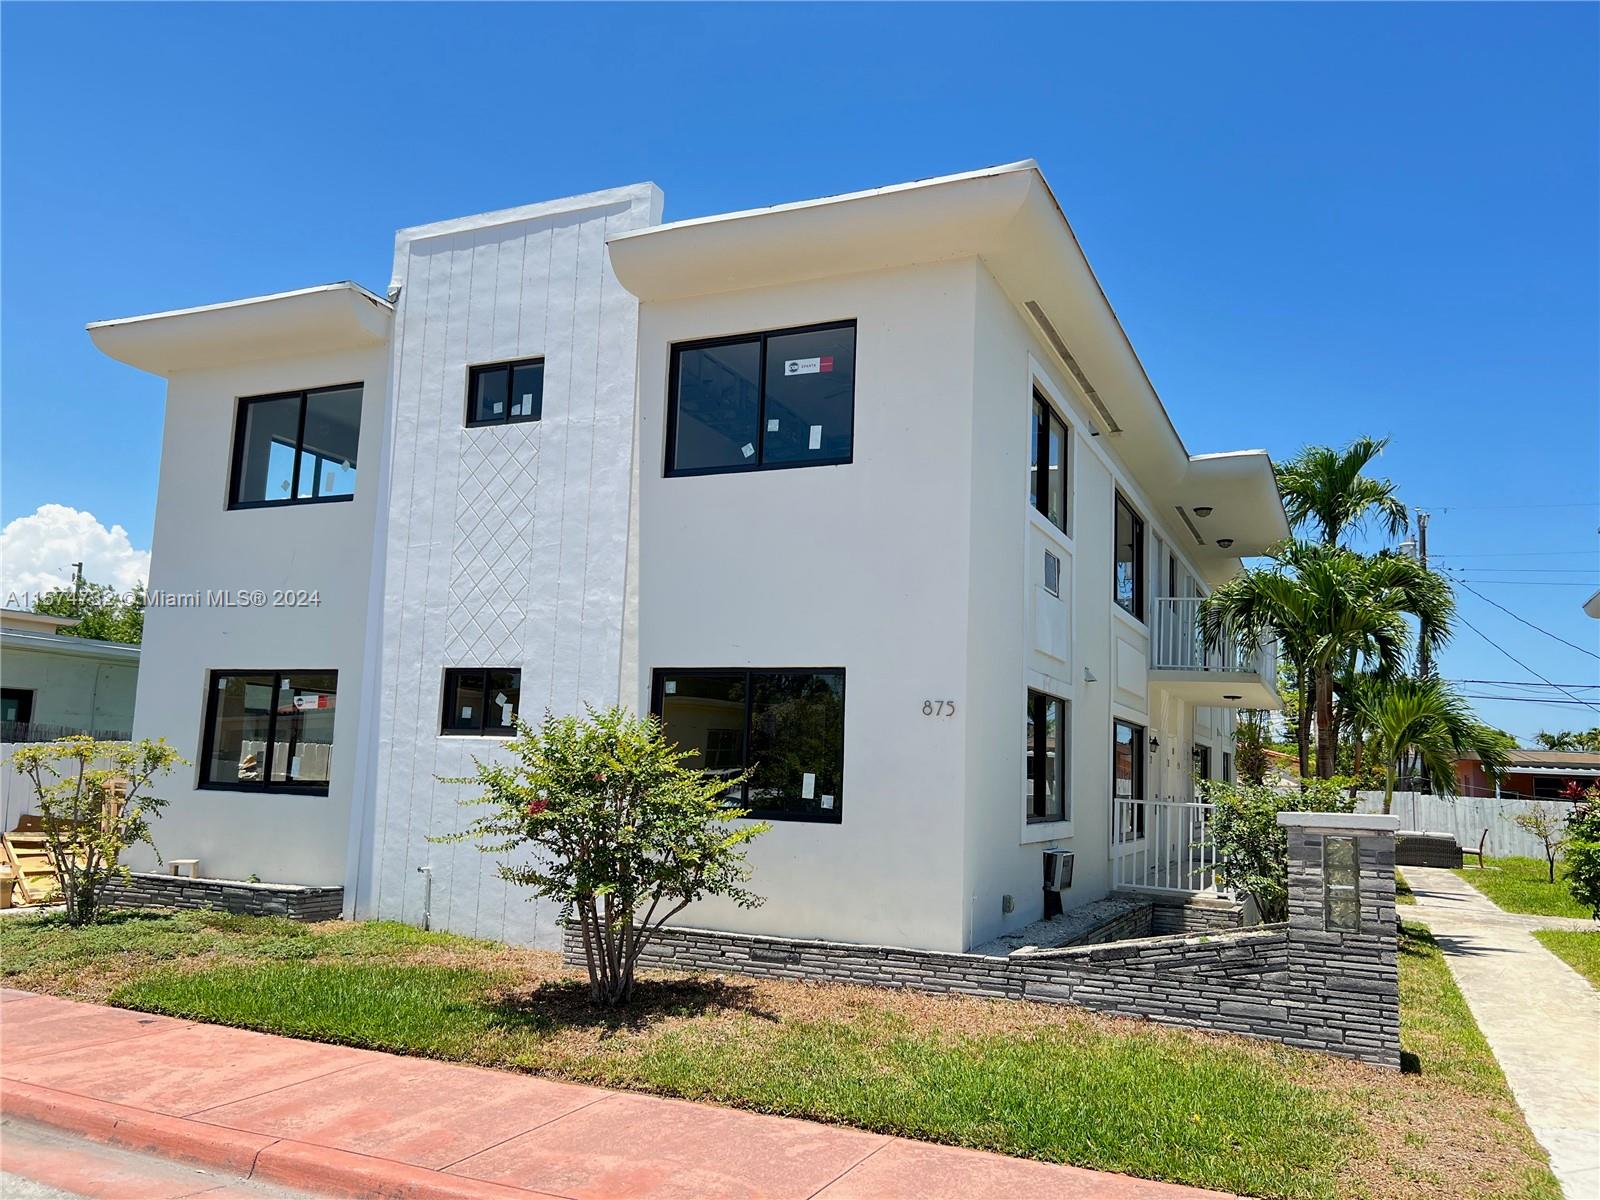 Rental Property at 875 80th St St 1, Miami Beach, Miami-Dade County, Florida - Bedrooms: 3 
Bathrooms: 2  - $2,990 MO.